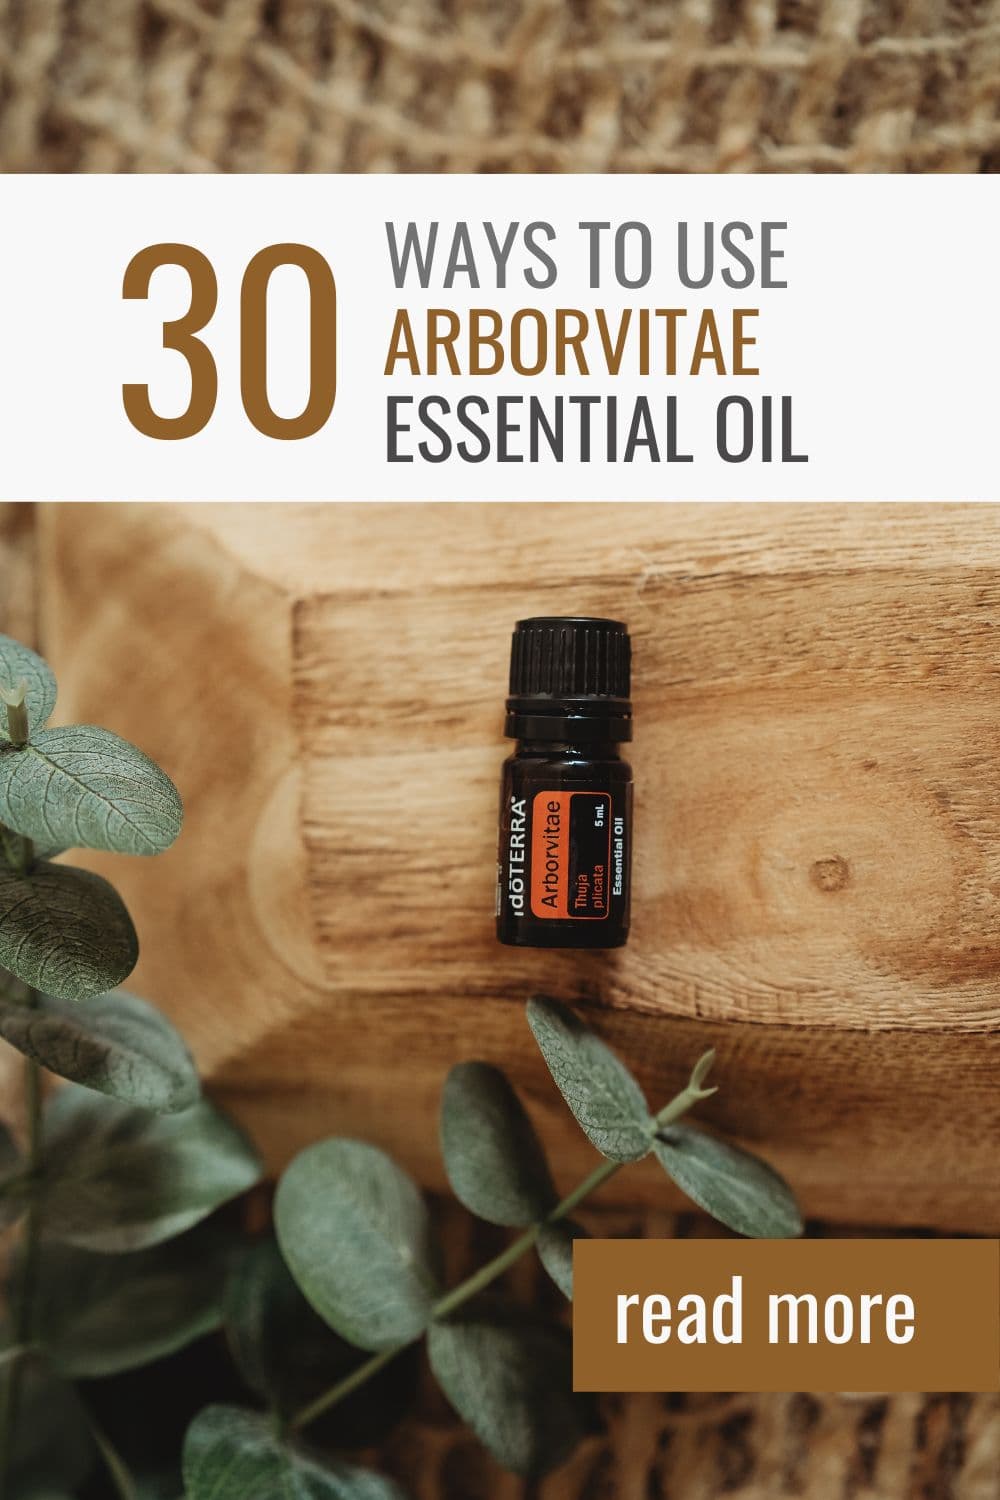 30 Ways to Use Arborvitae Essential Oil